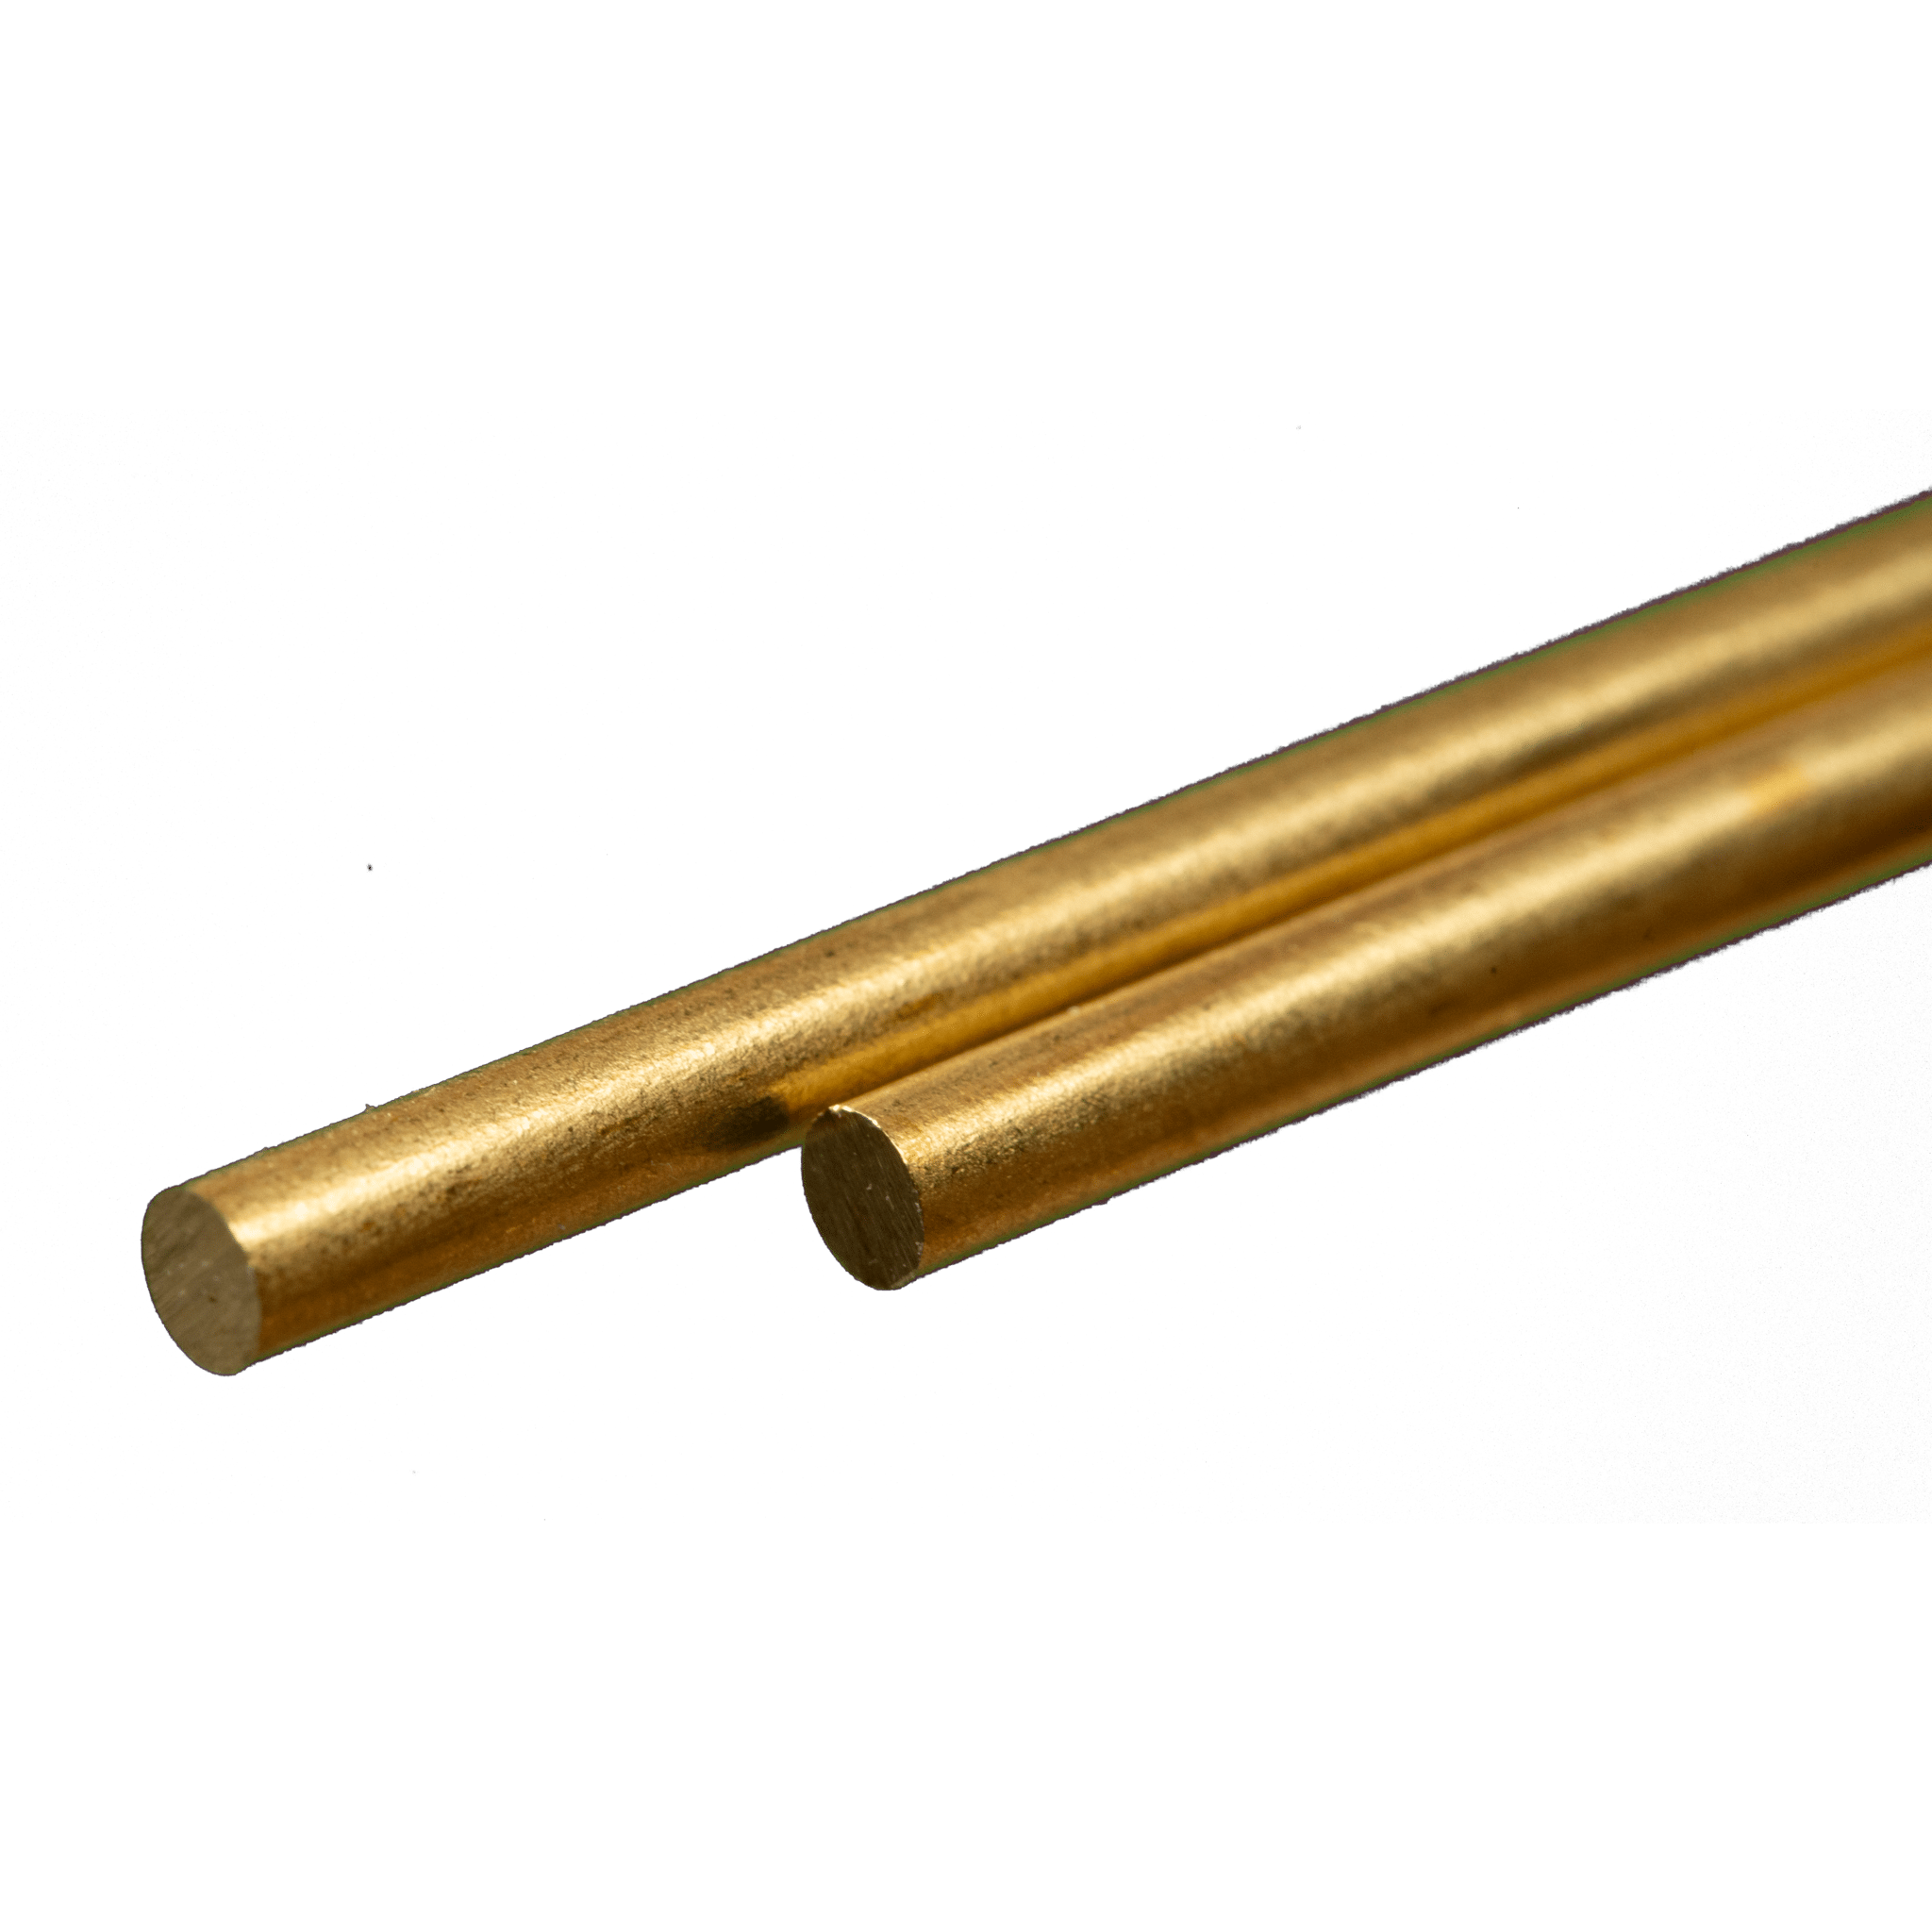 K&S Metals 8167 Round Brass Rod 0.114" OD x 12" Long (2 Pieces)